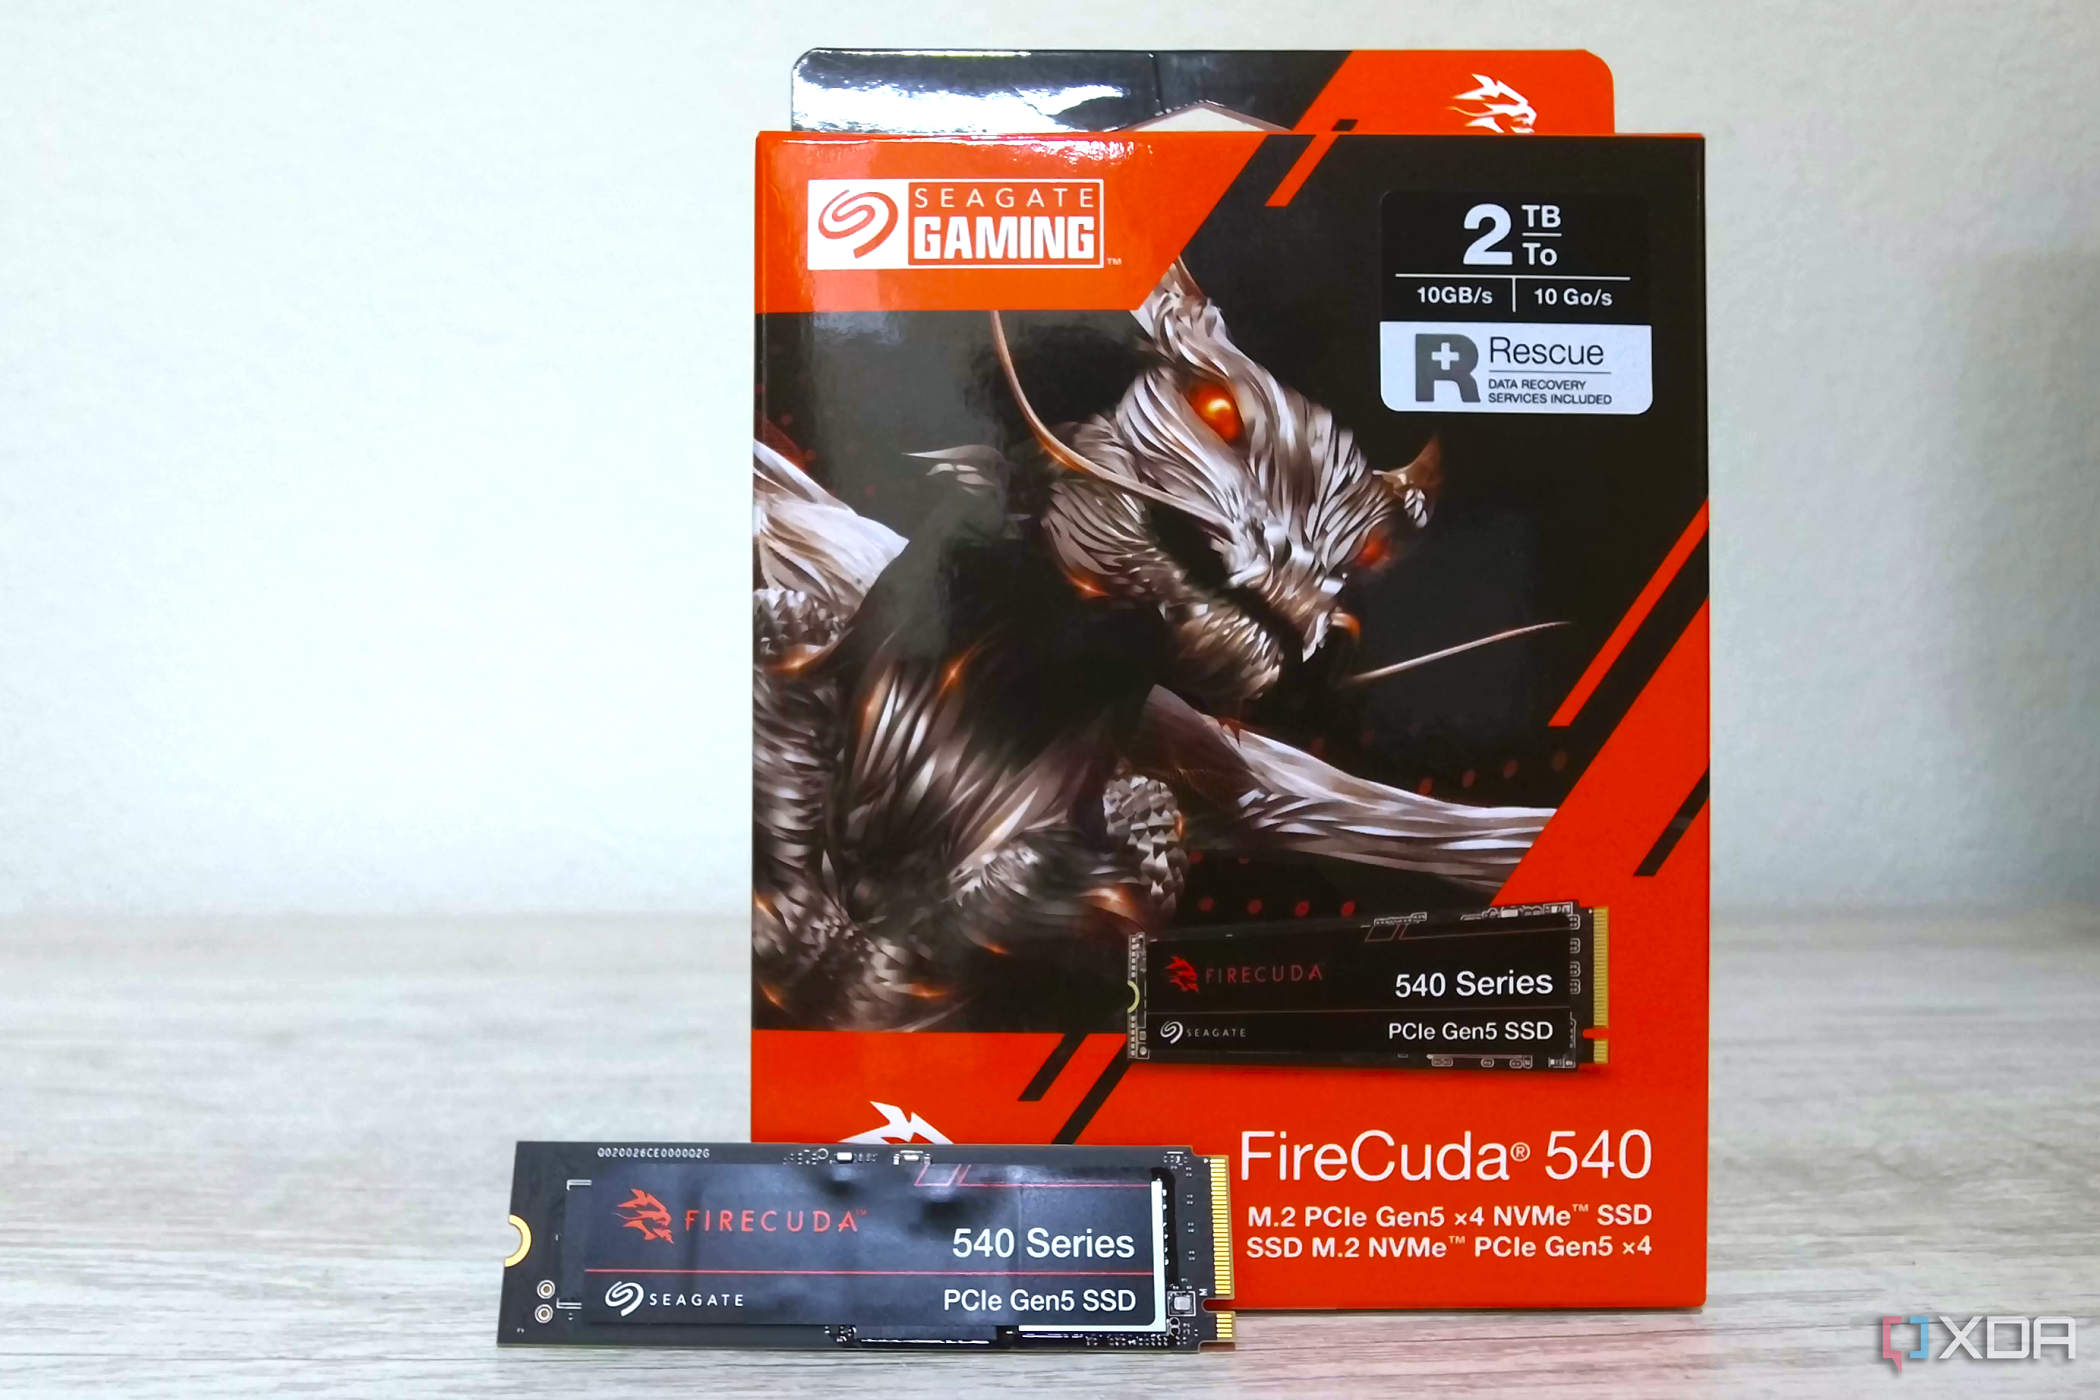 Seagate FireCuda 540 box and SSD.